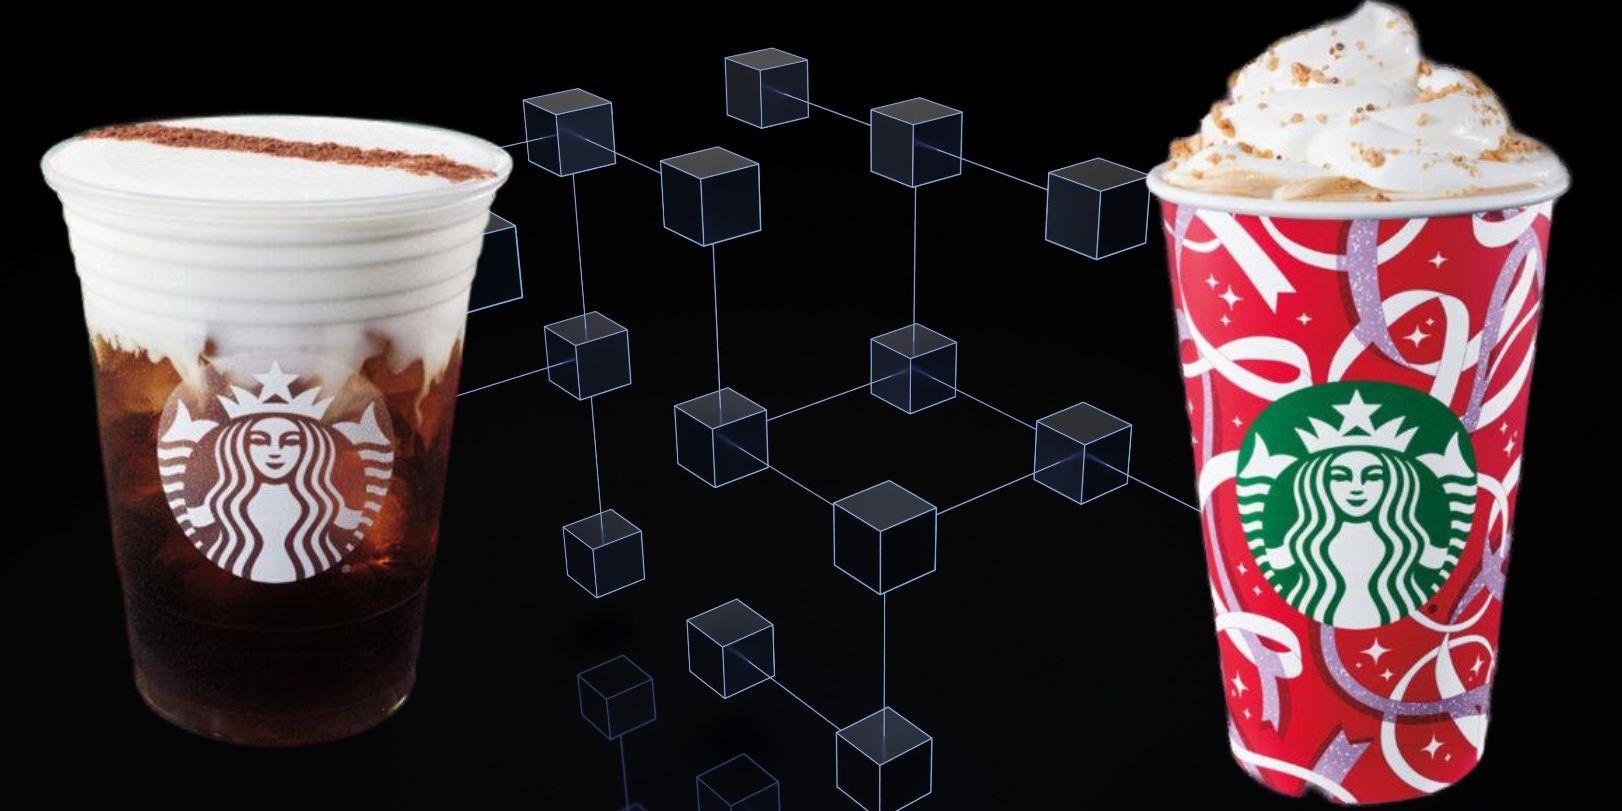 Two starbucks drinks overlaid on blockchain graphic.